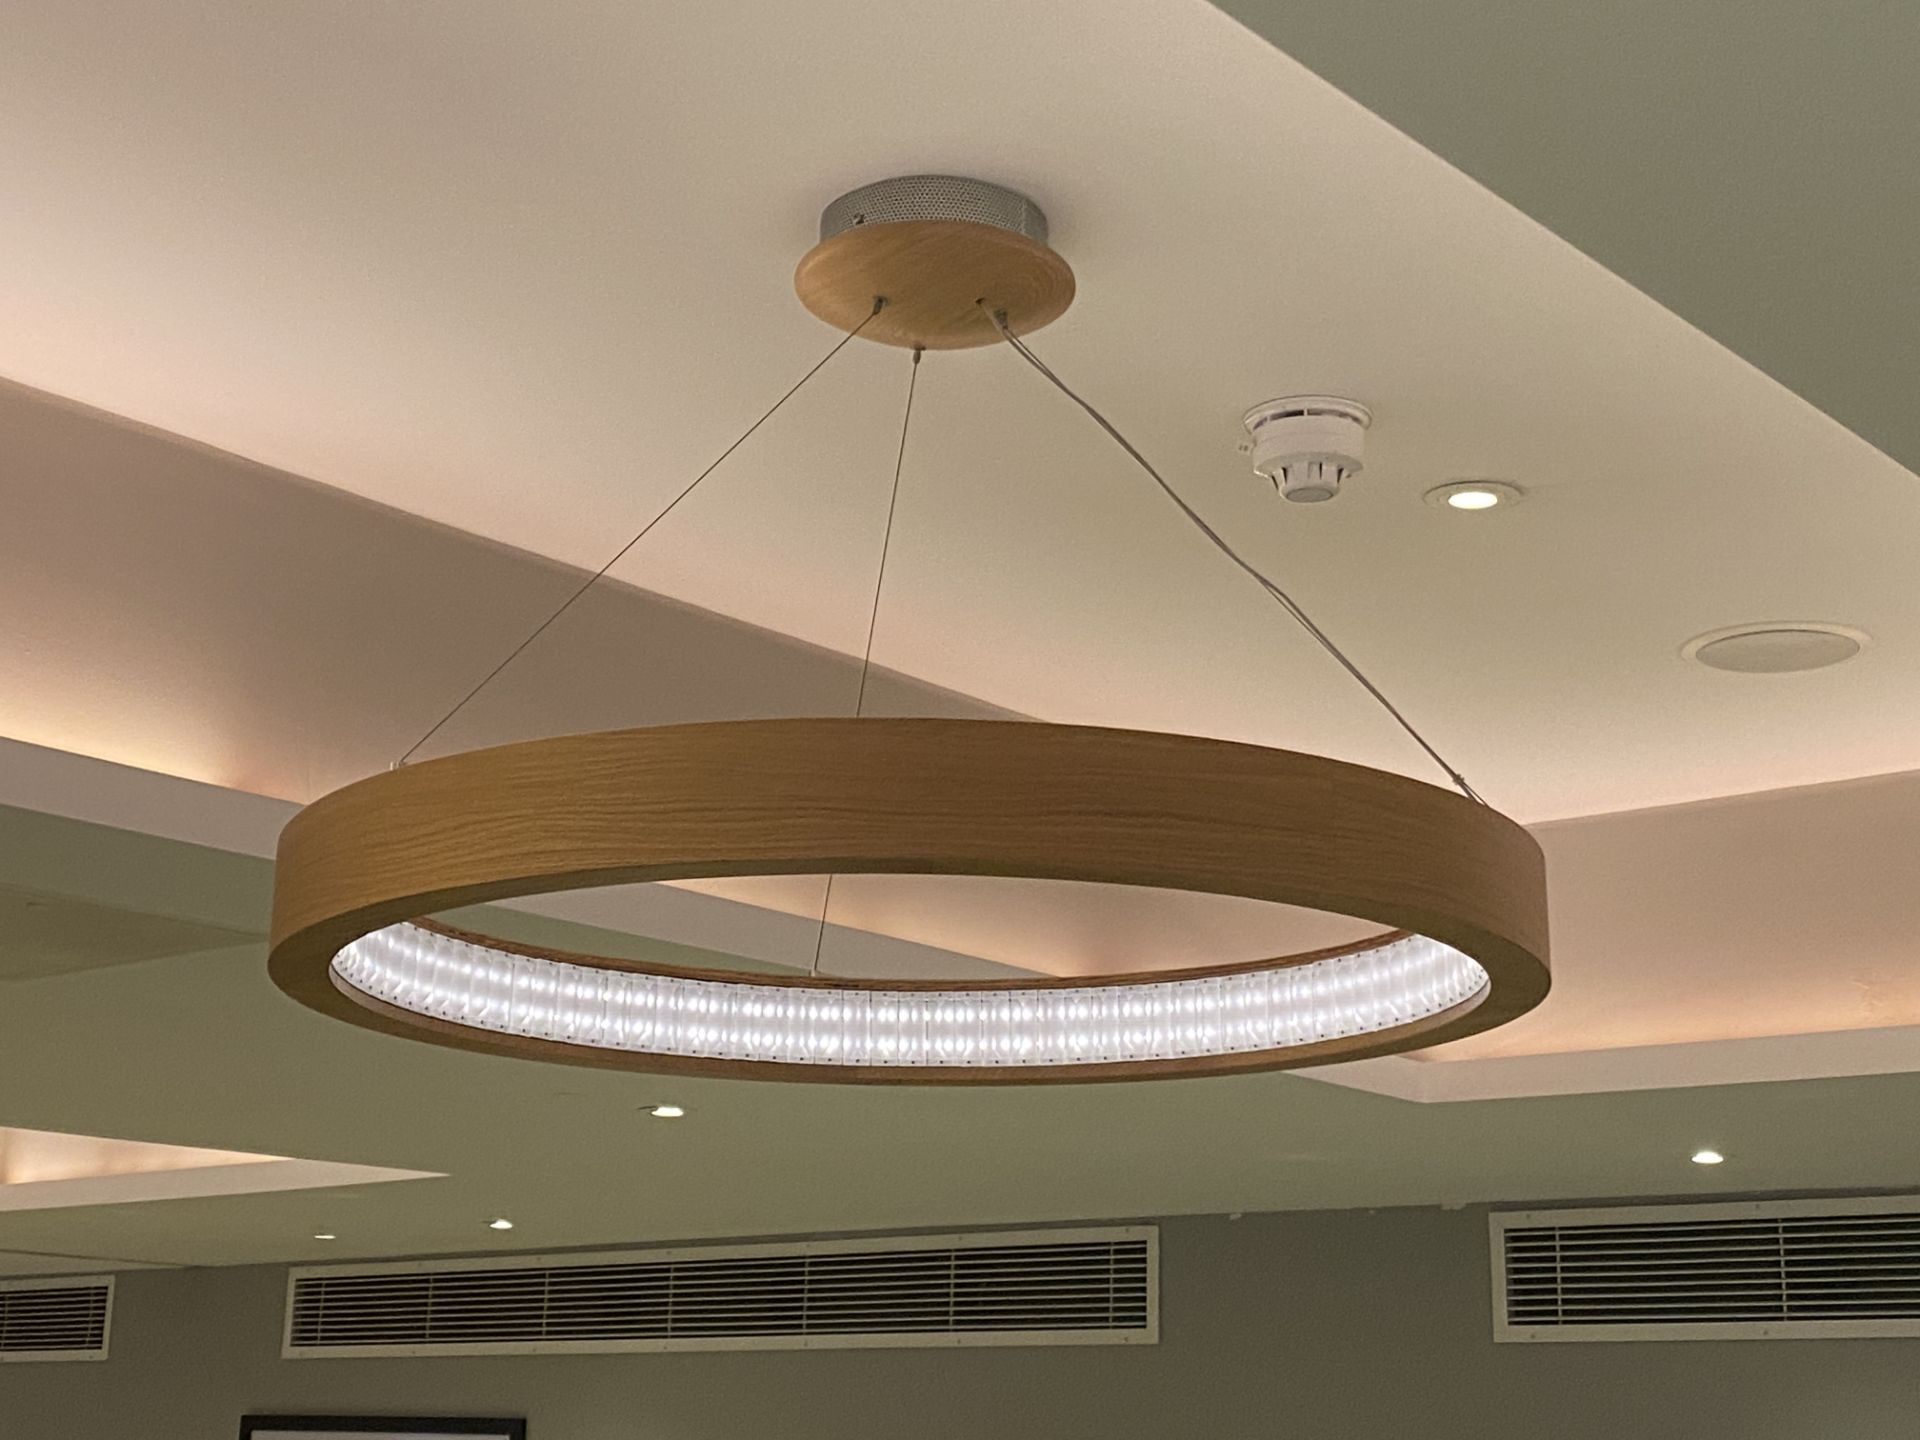 Large wooden circular LED decorative light